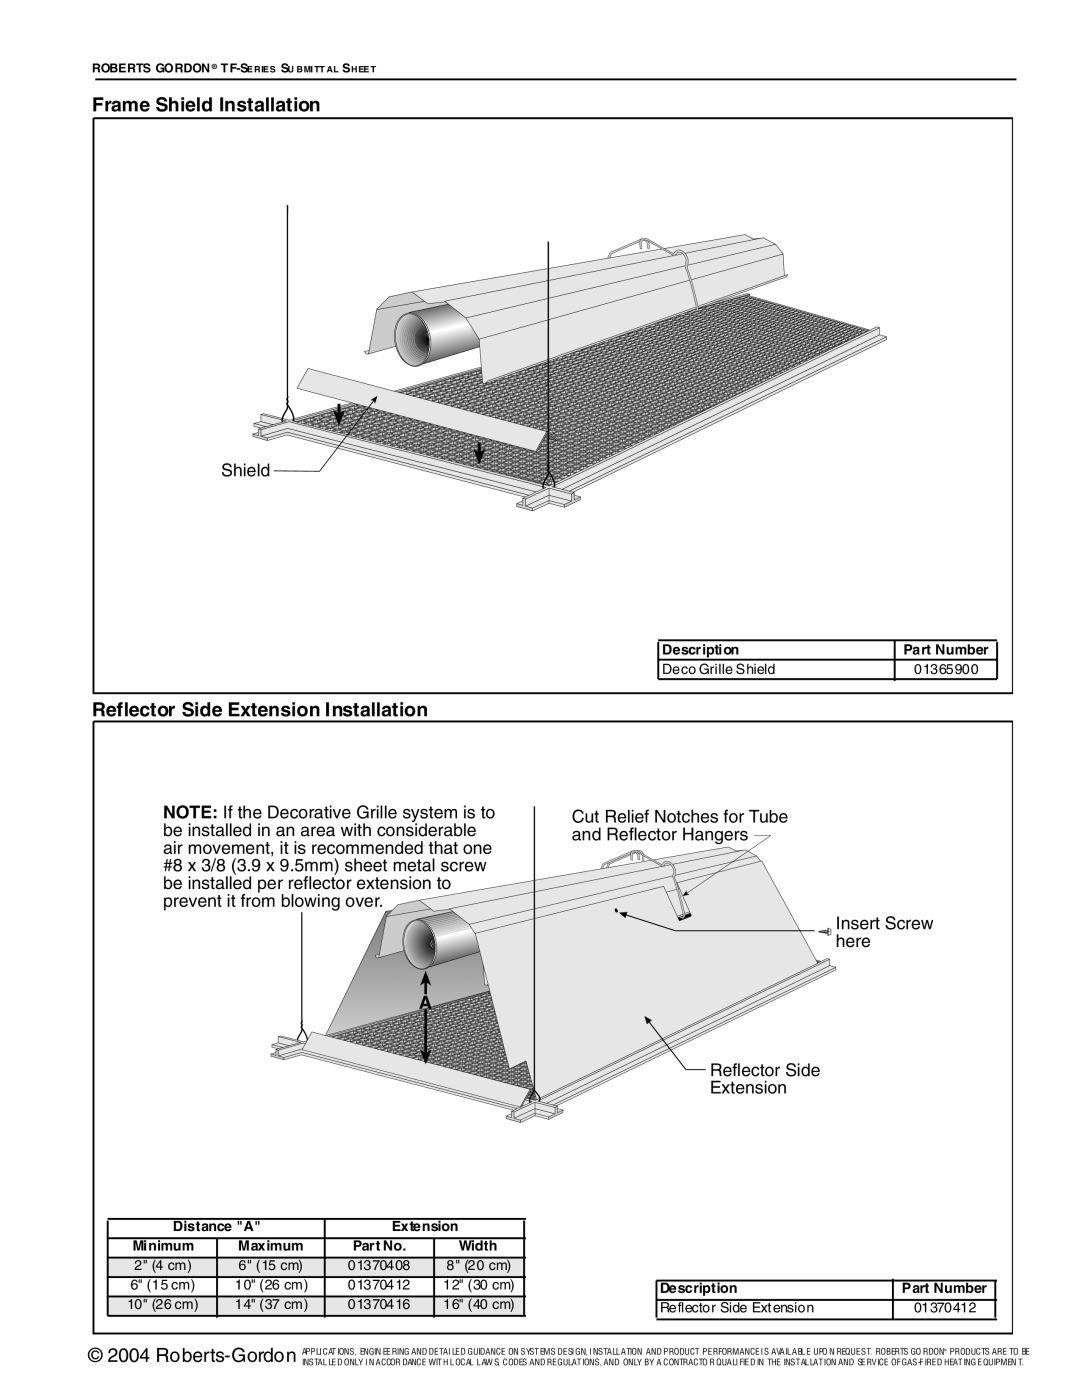 Roberts Gorden TF-Series service manual Frame Shield Installation, Reflector Side Extension Installation 